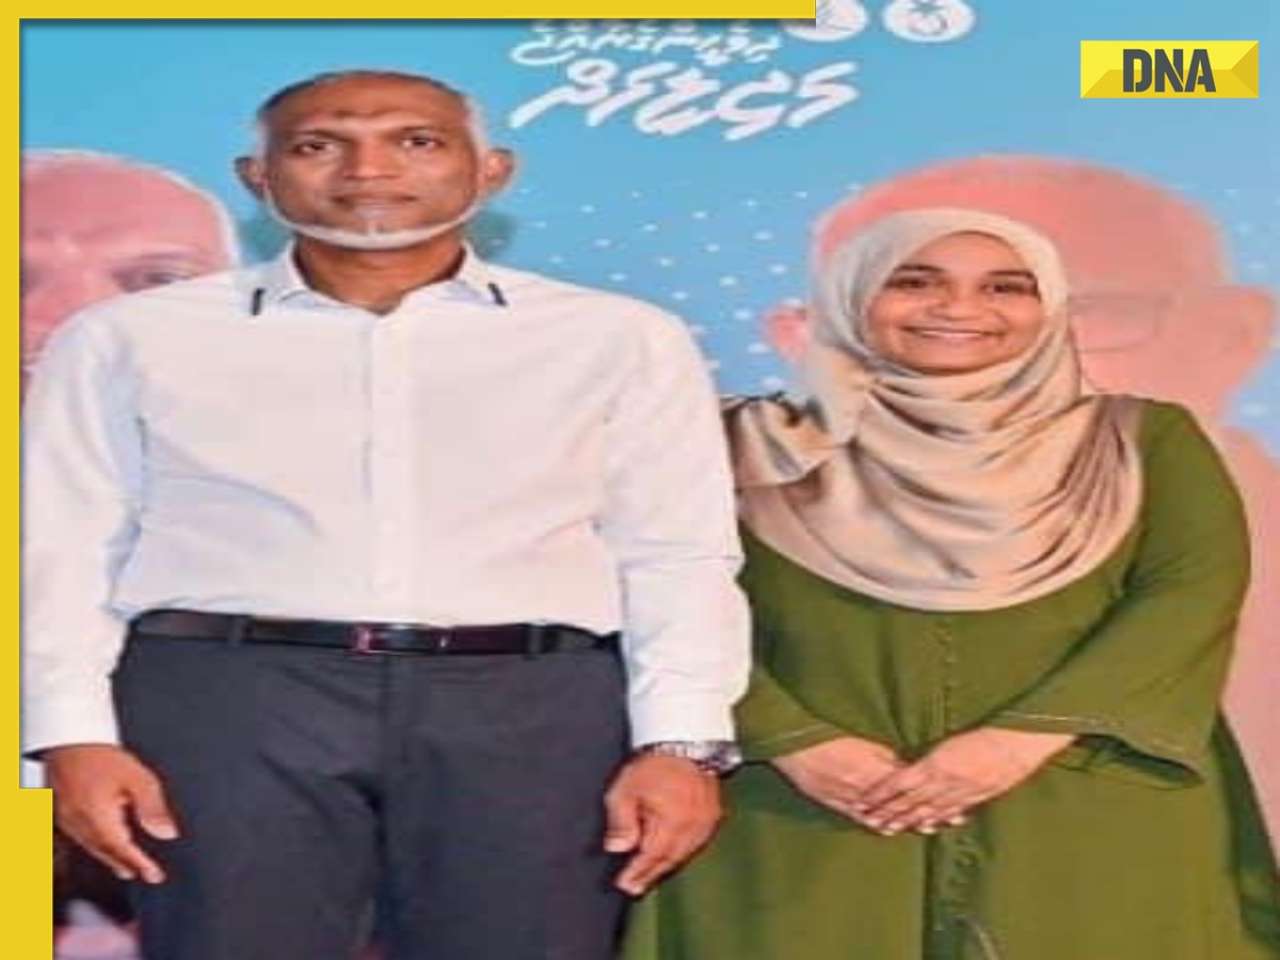 Maldivian politician Mariyam Shiuna apologises after post linked to Indian flag sparks row